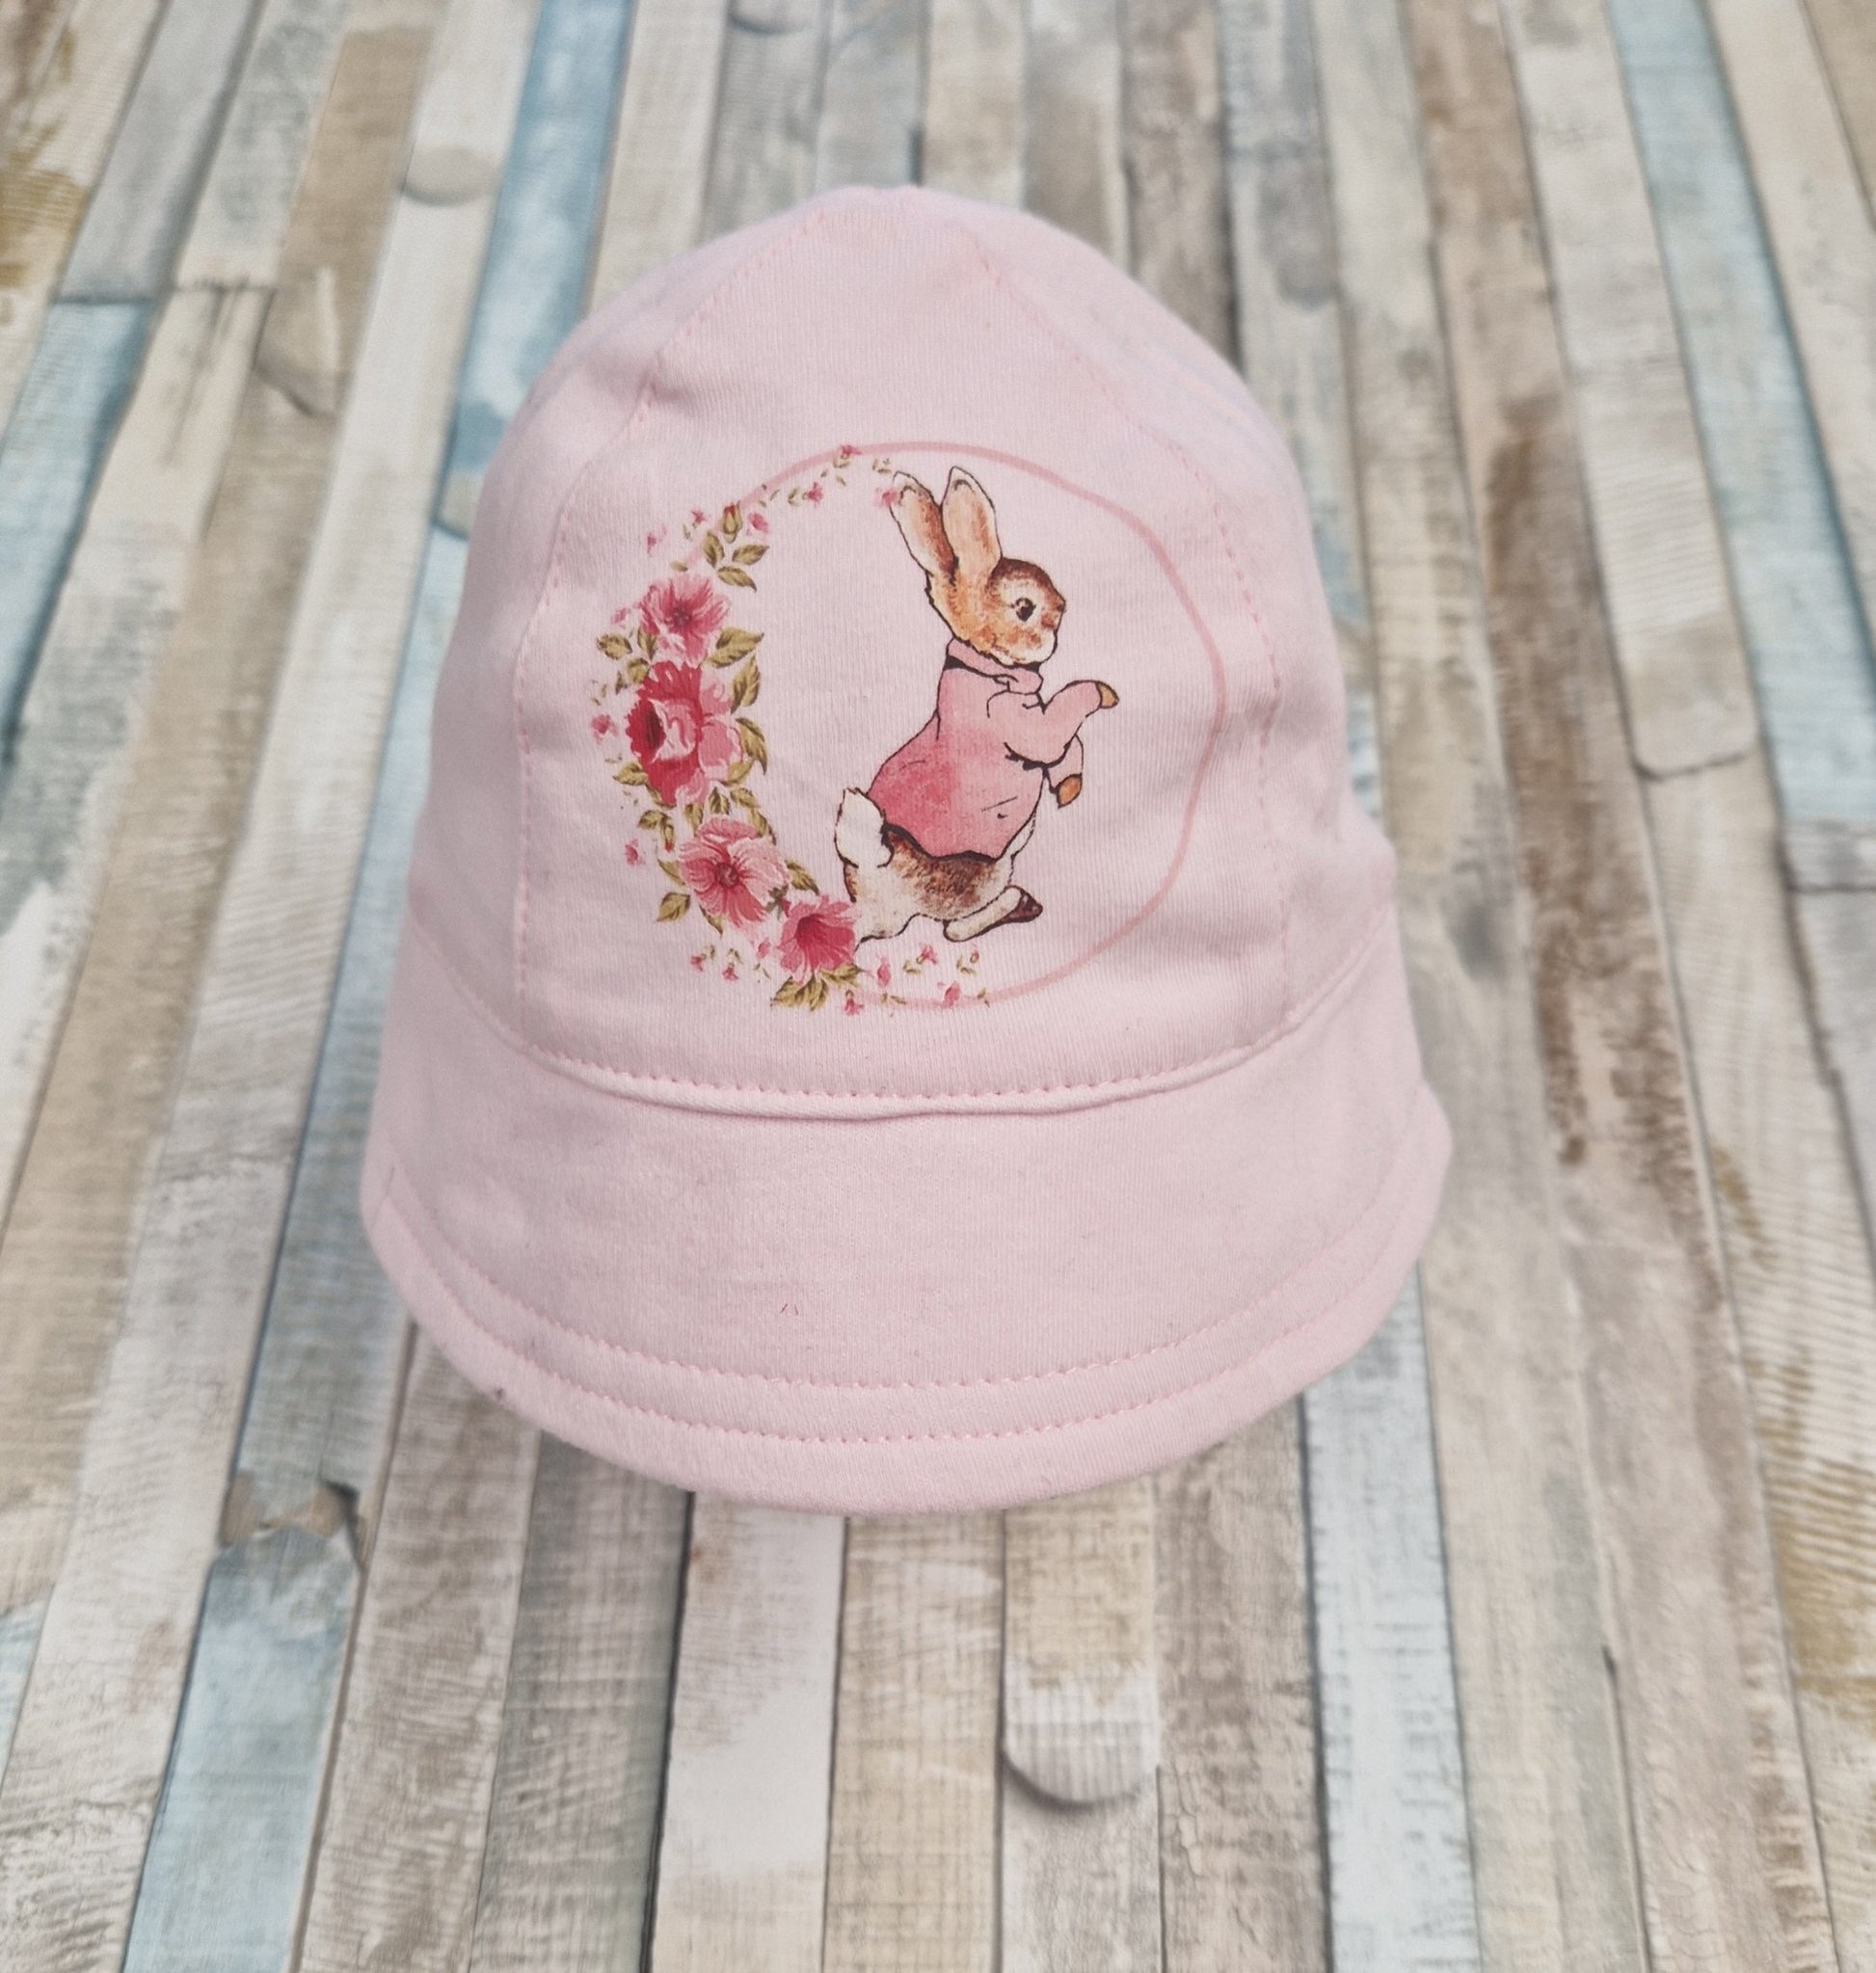 Baby Girls Pink Sunhat With Printed Pink Rabbit Design